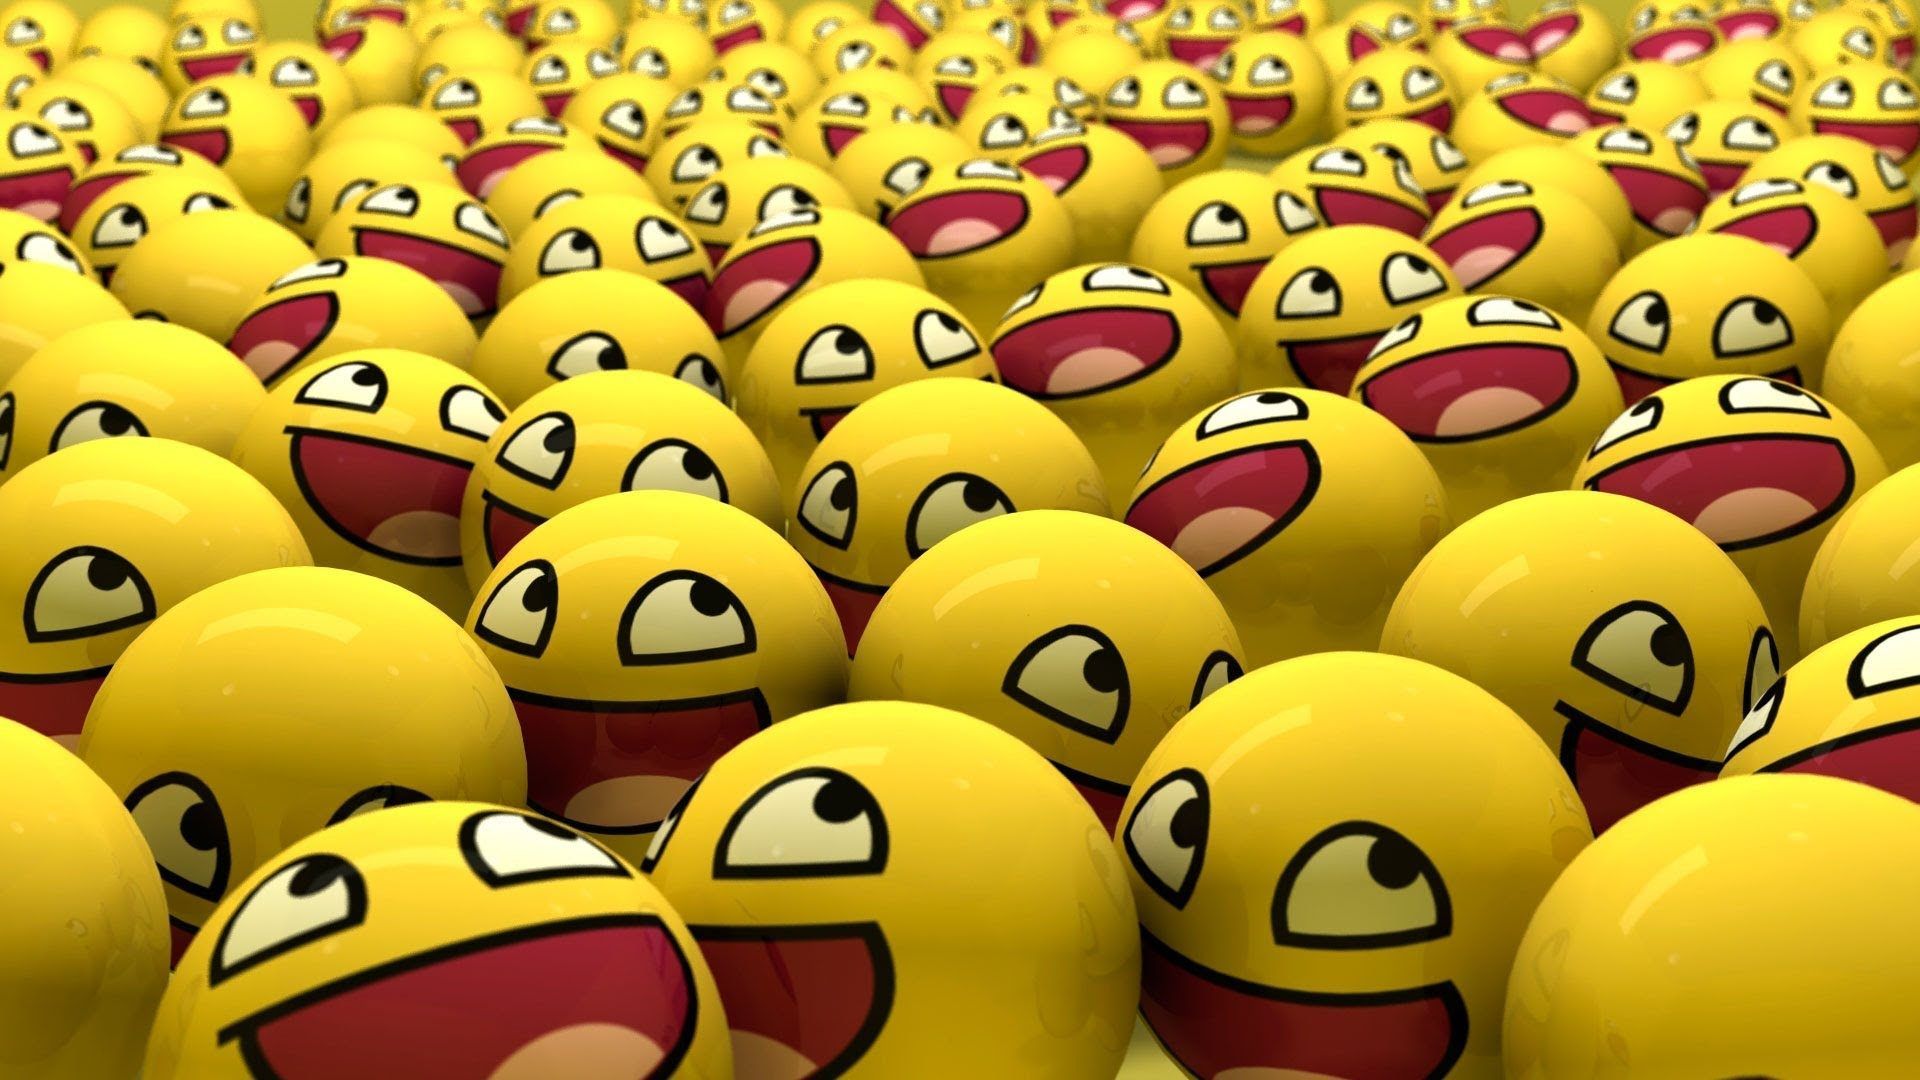 Smiling Faces Funny Wallpaper For Desktop Free Download Of Smiley